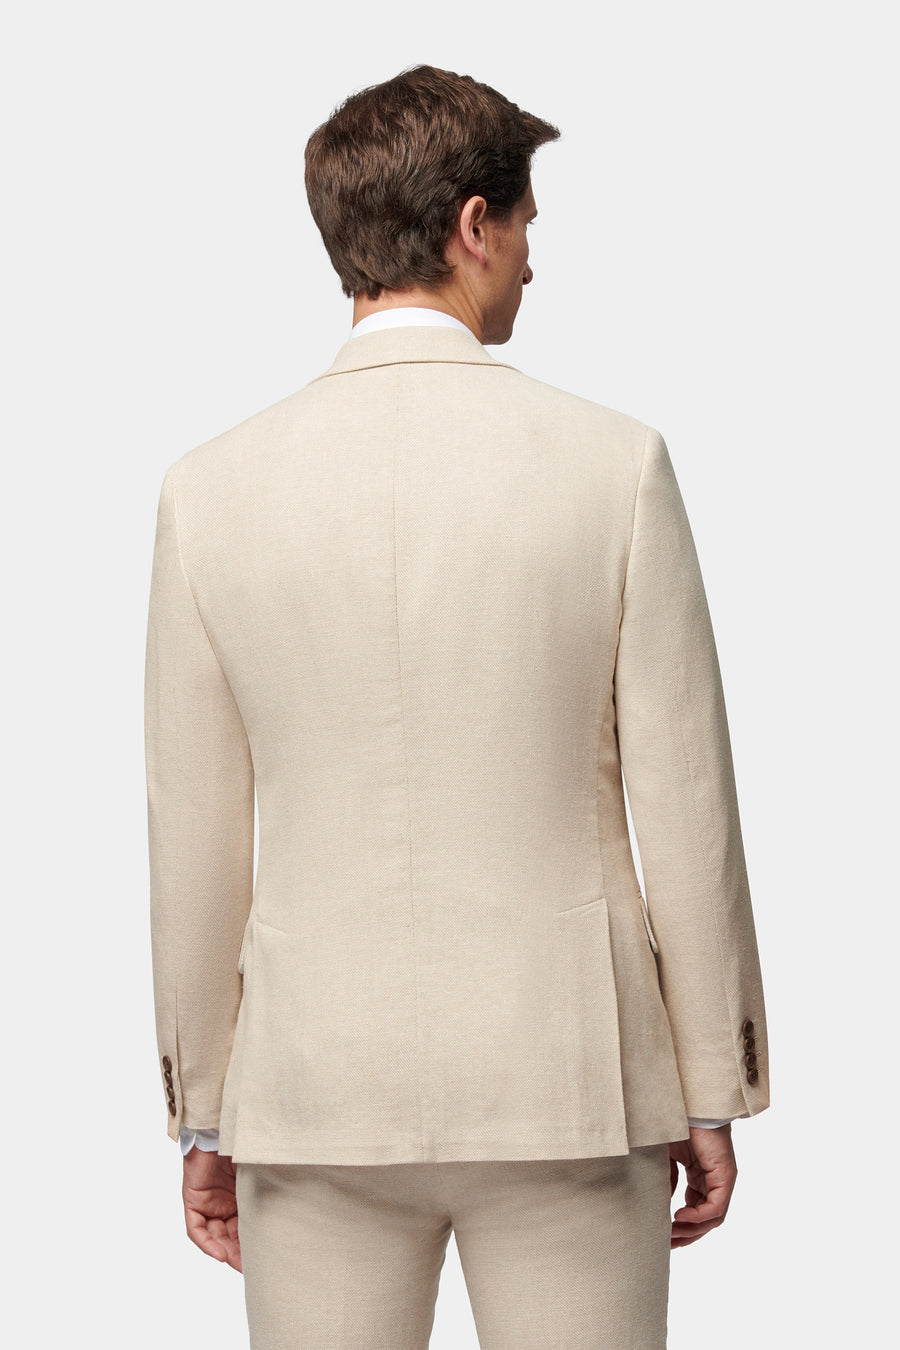 Peckham Rye Linen Blend Jacket in Egret